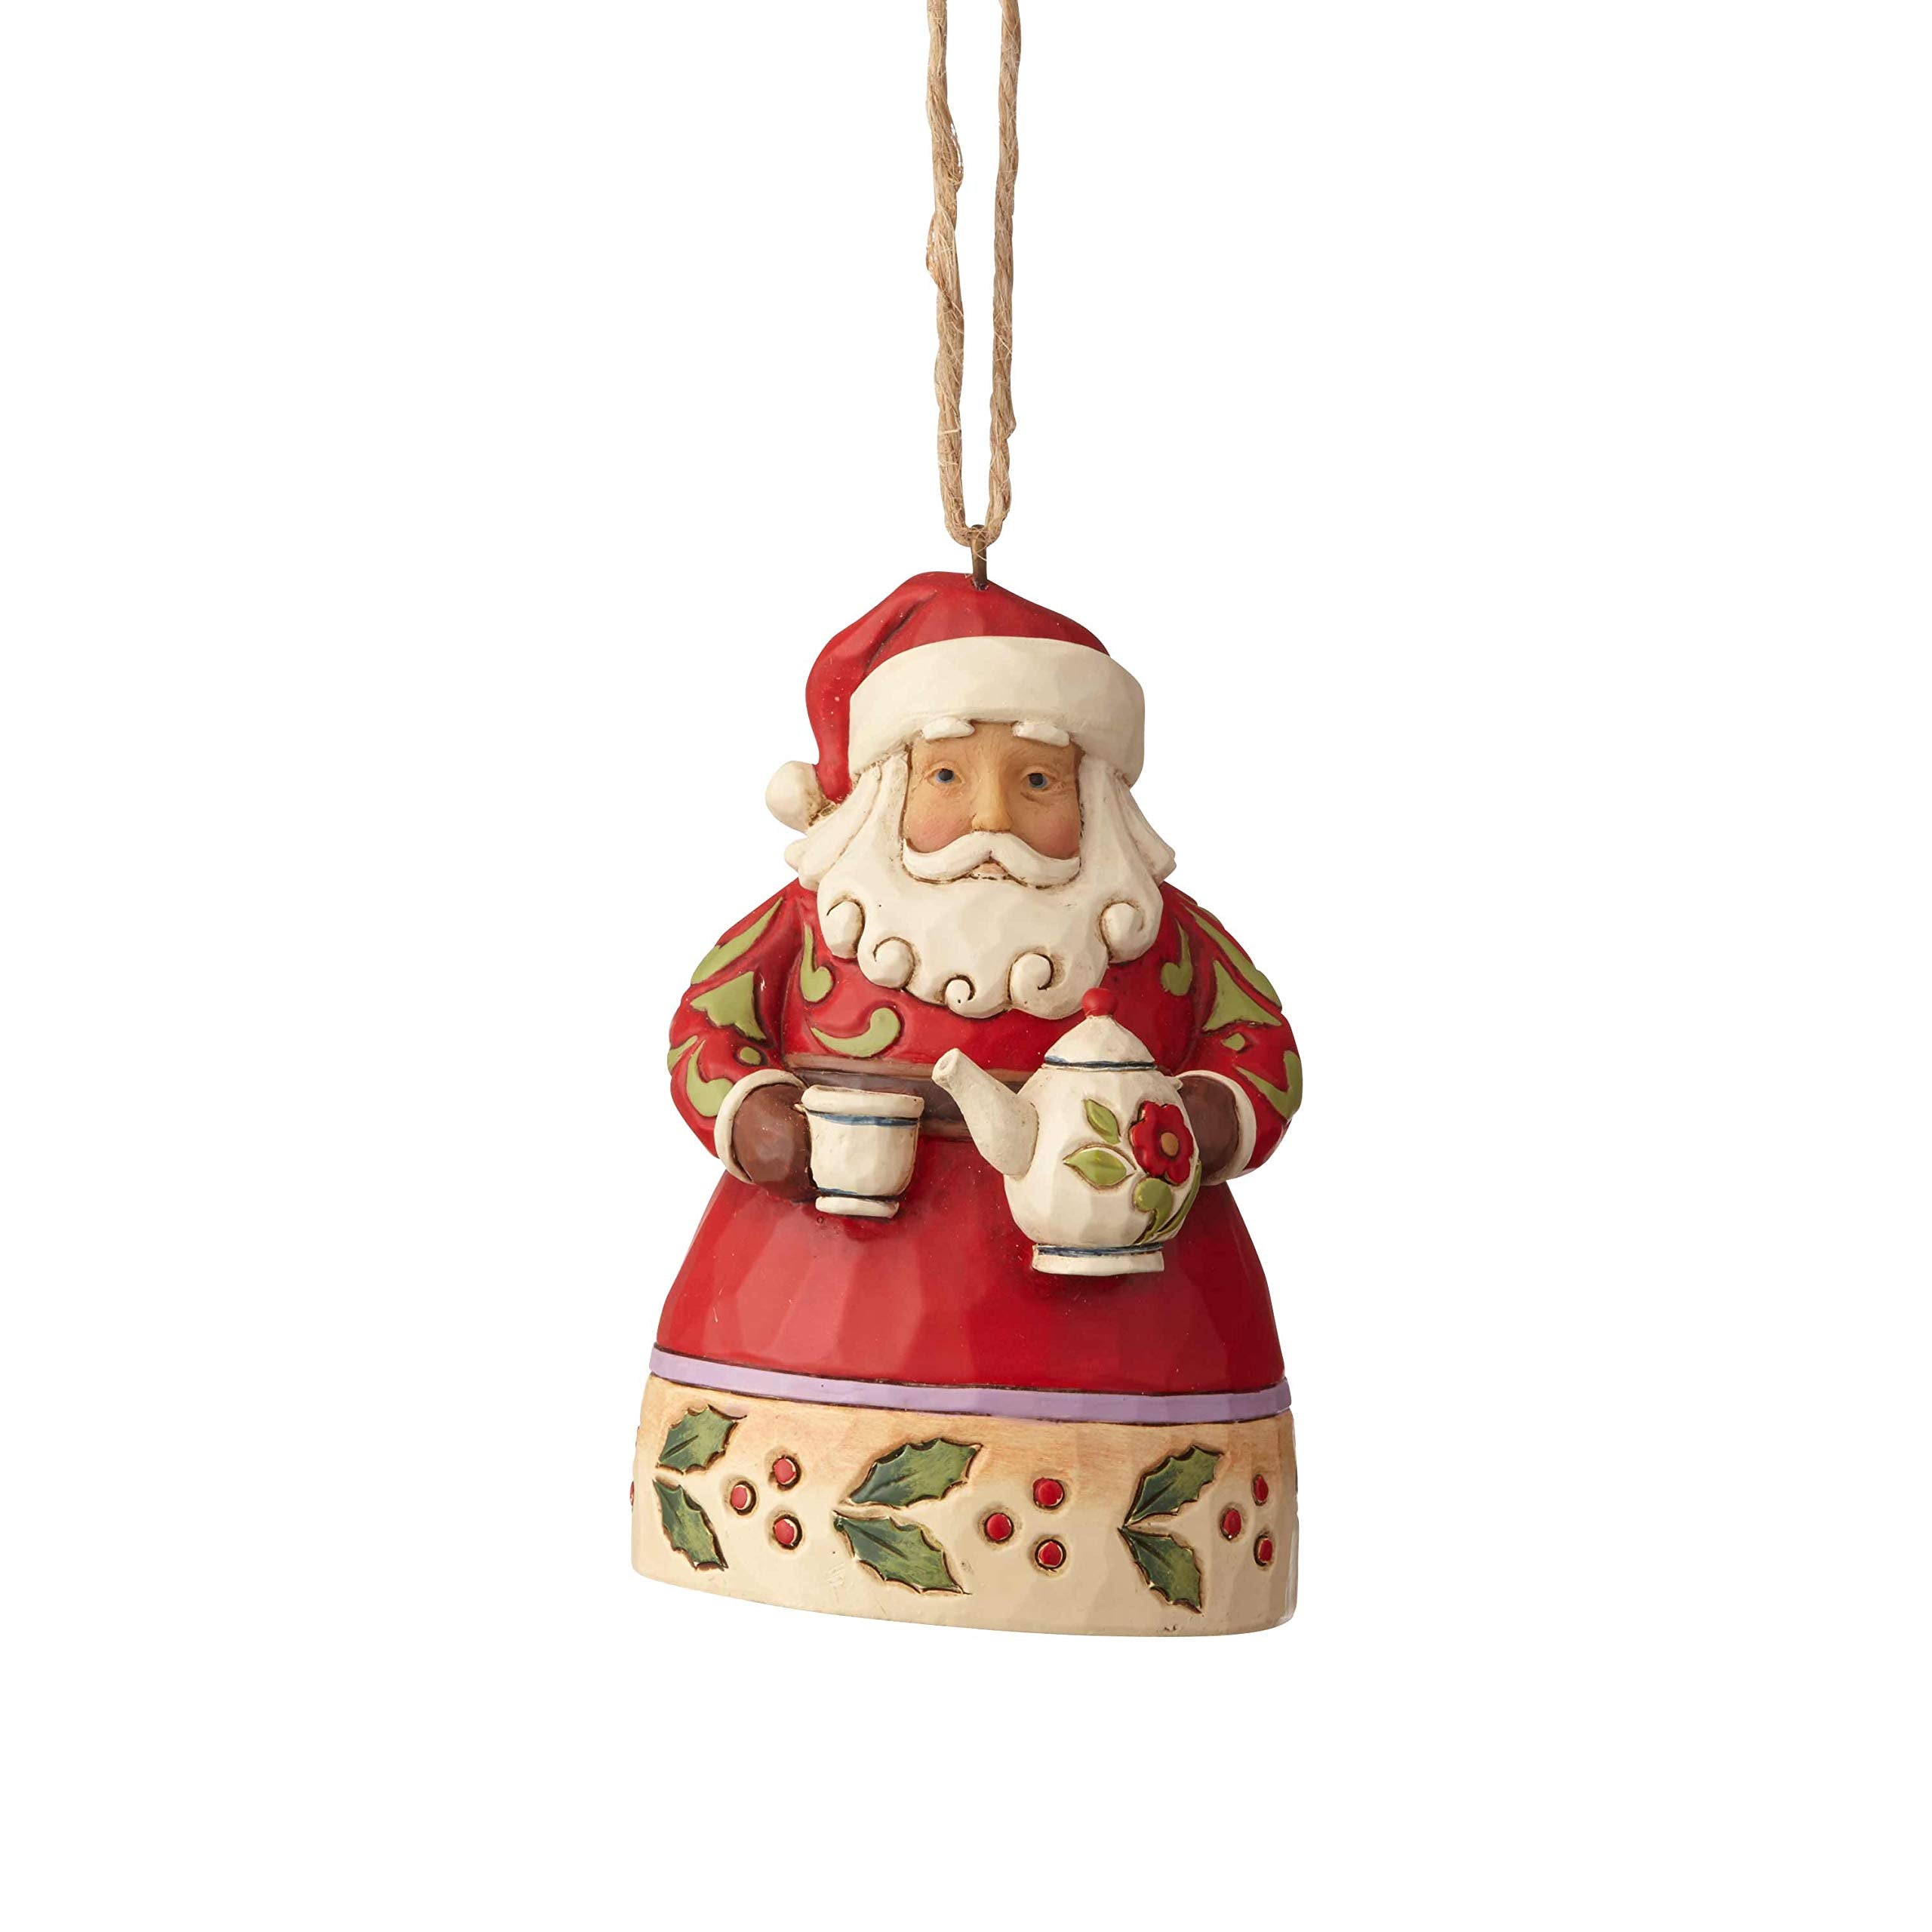 Enesco Jim Shore Heartwood Creek Mini Santa with Teapot Hanging Ornament, 3.75", Multicolor